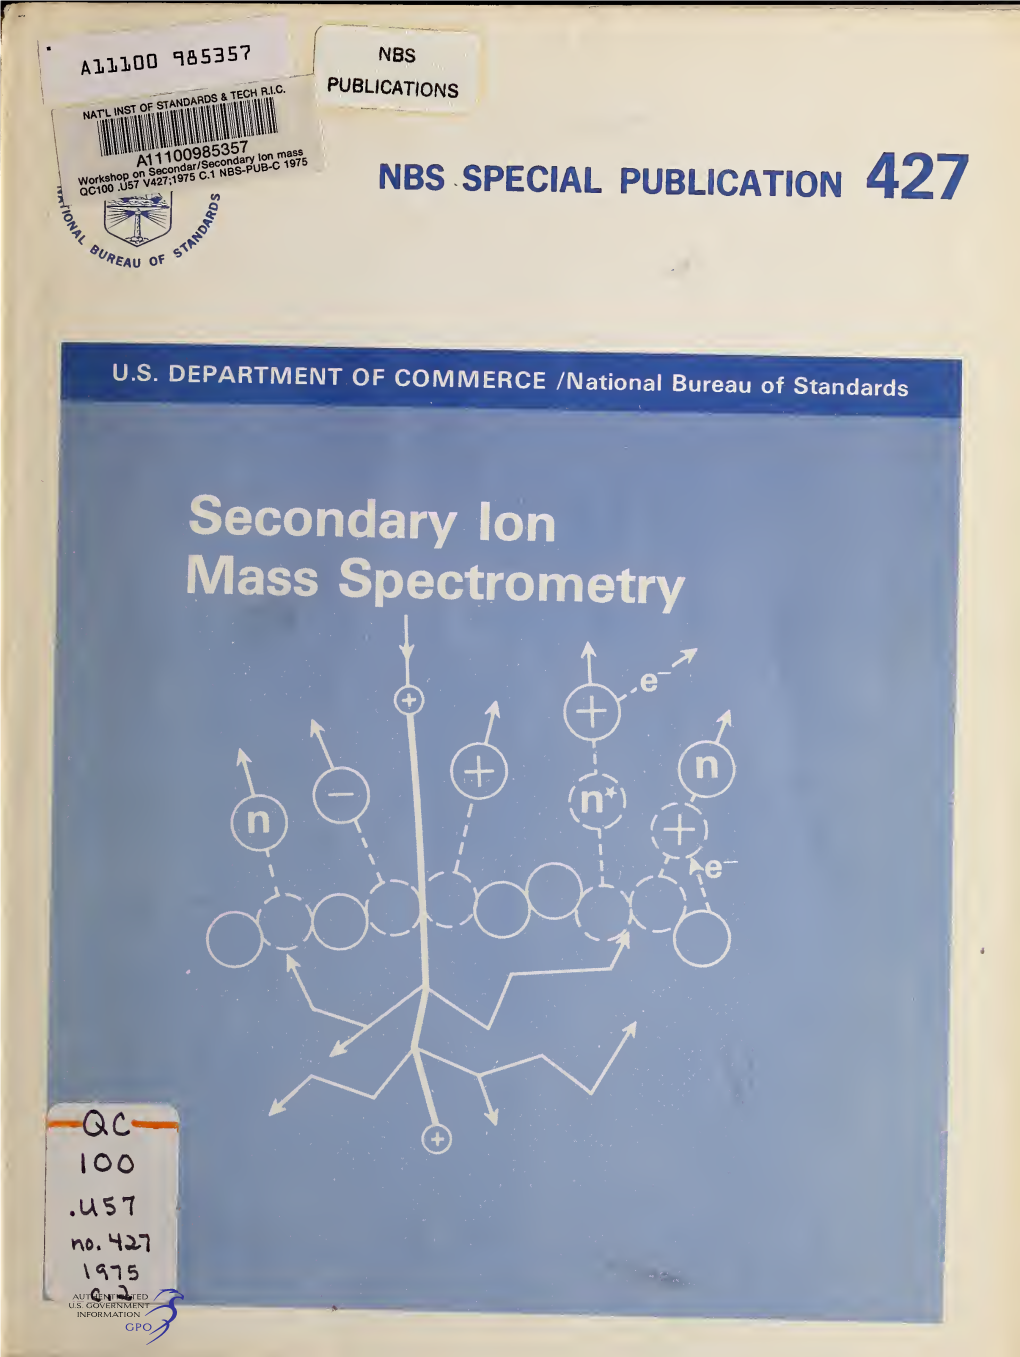 Secondary Ion Mass Spectrometry ^^^^^ •^N^R-^.^O .^N.Knrrj